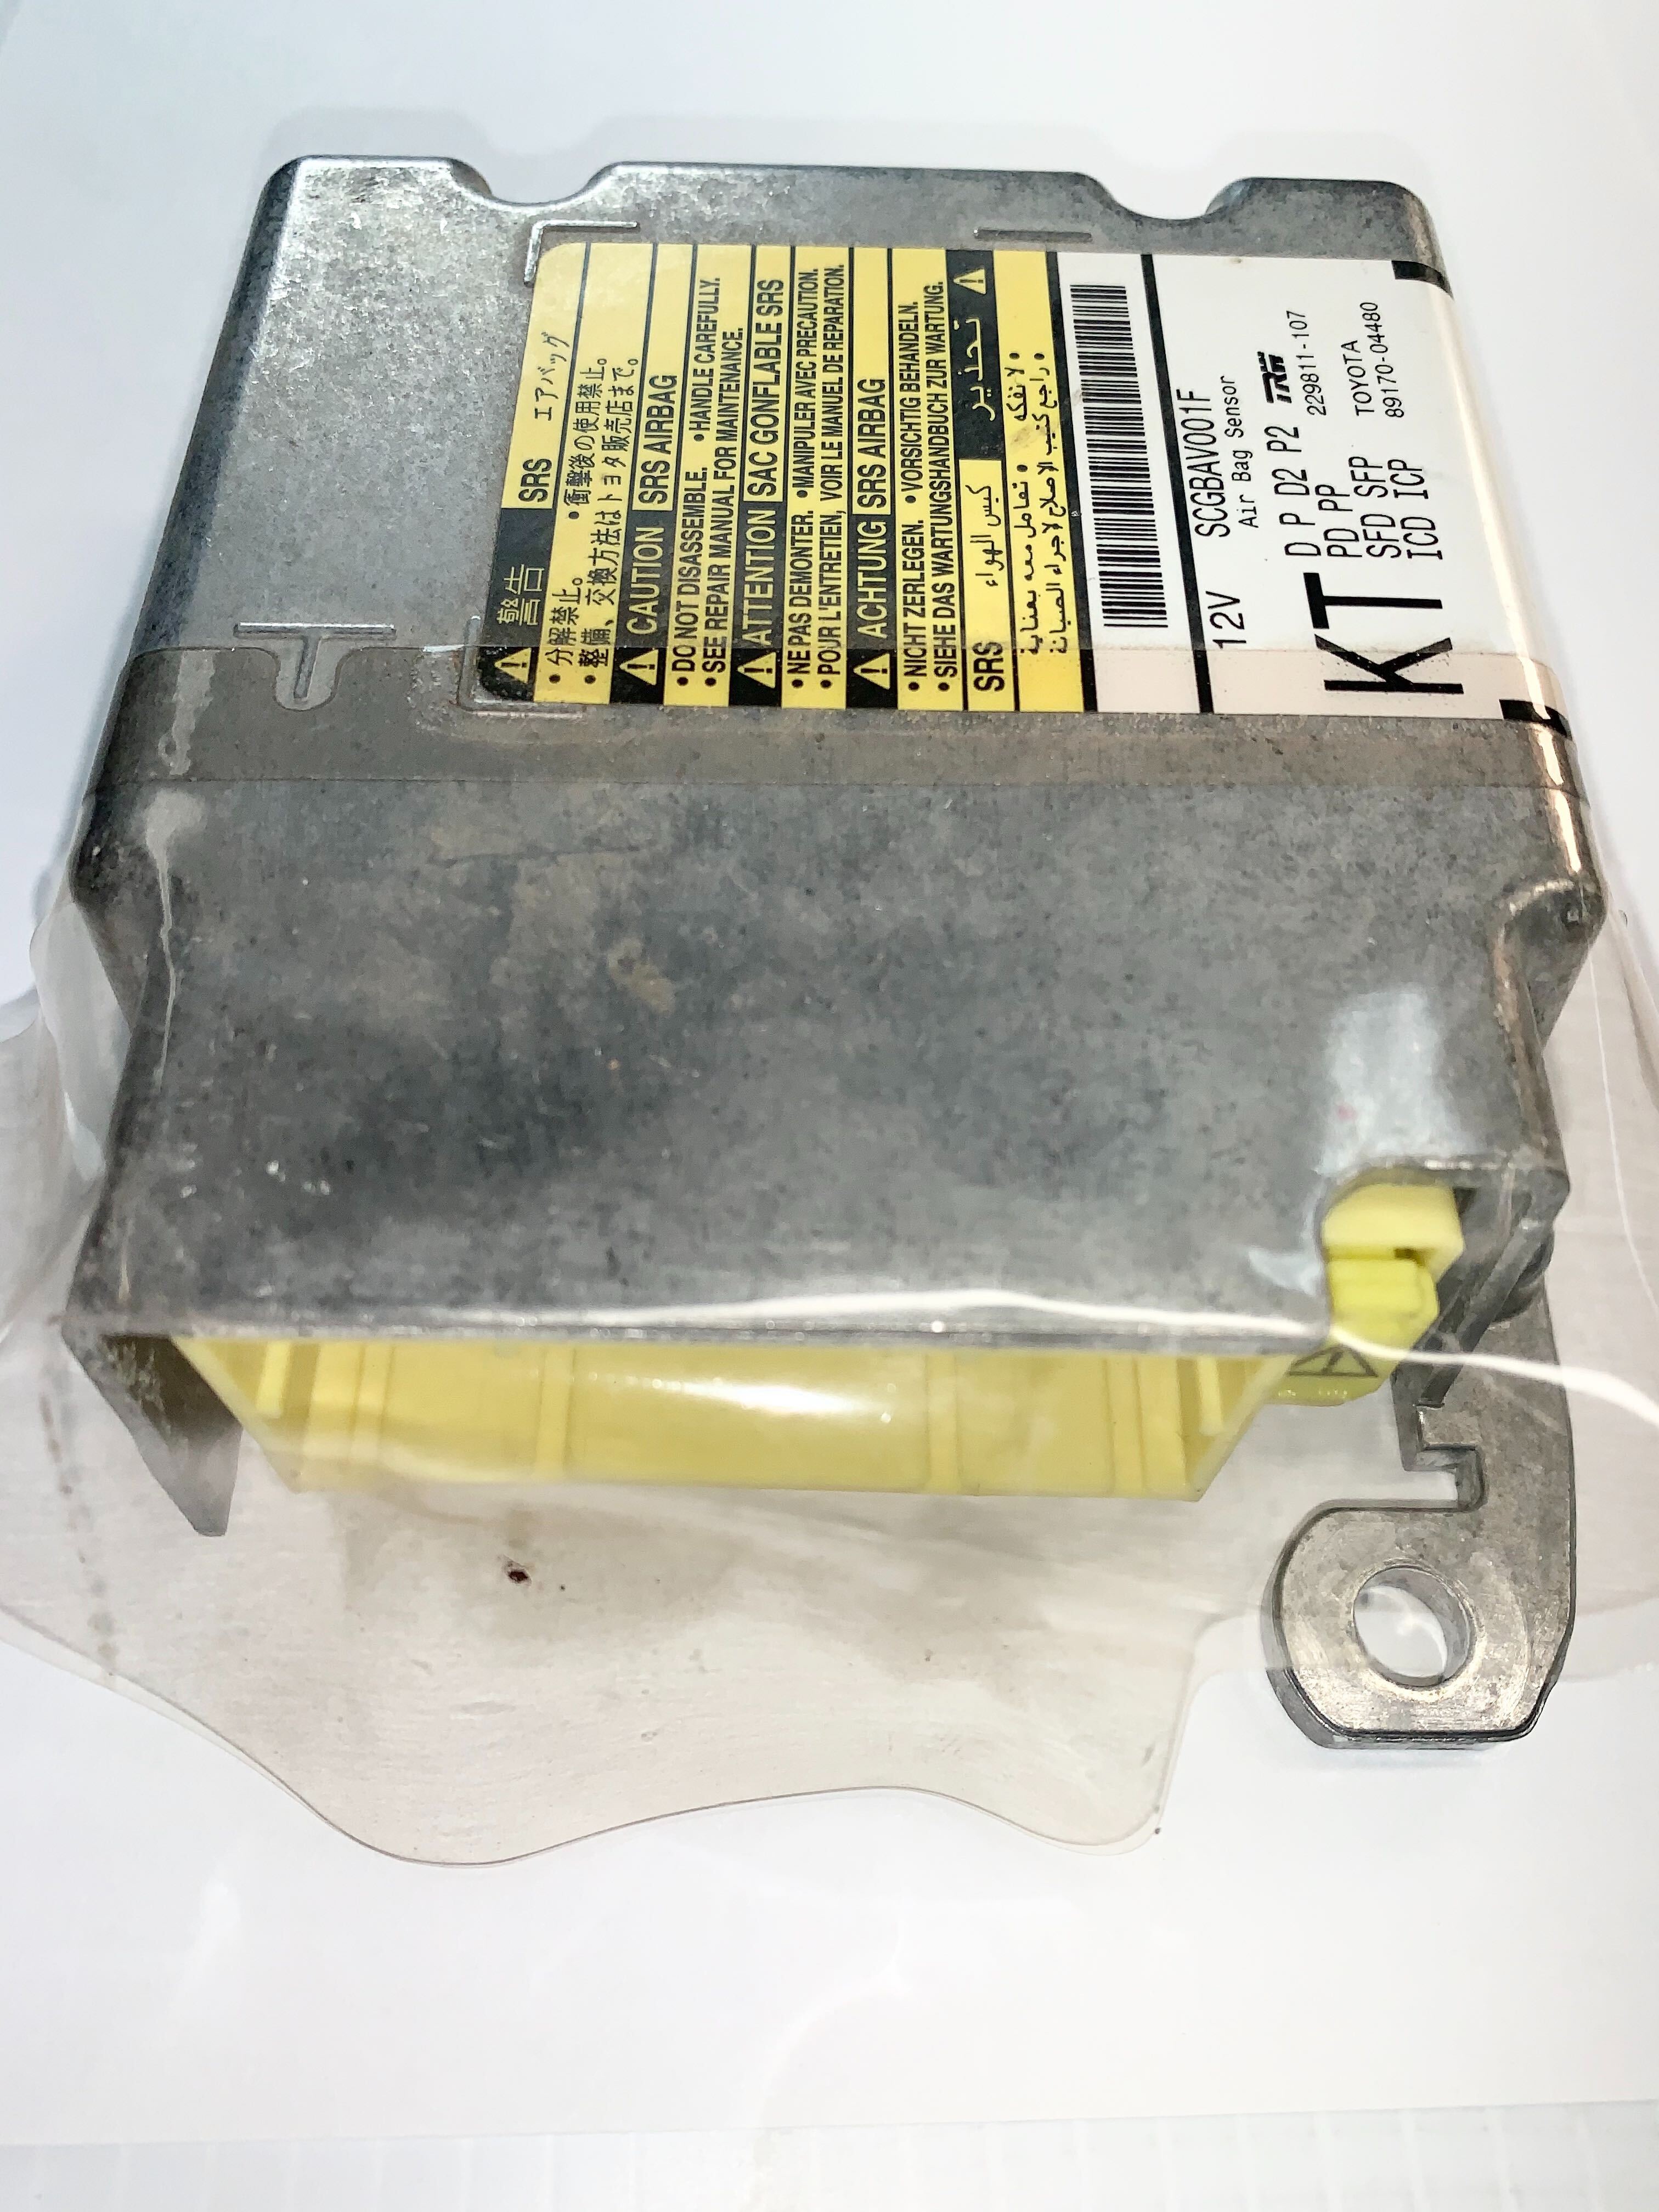 TOYOTA TACOMA SRS Airbag Computer Diagnostic Control Module PART #8917004710